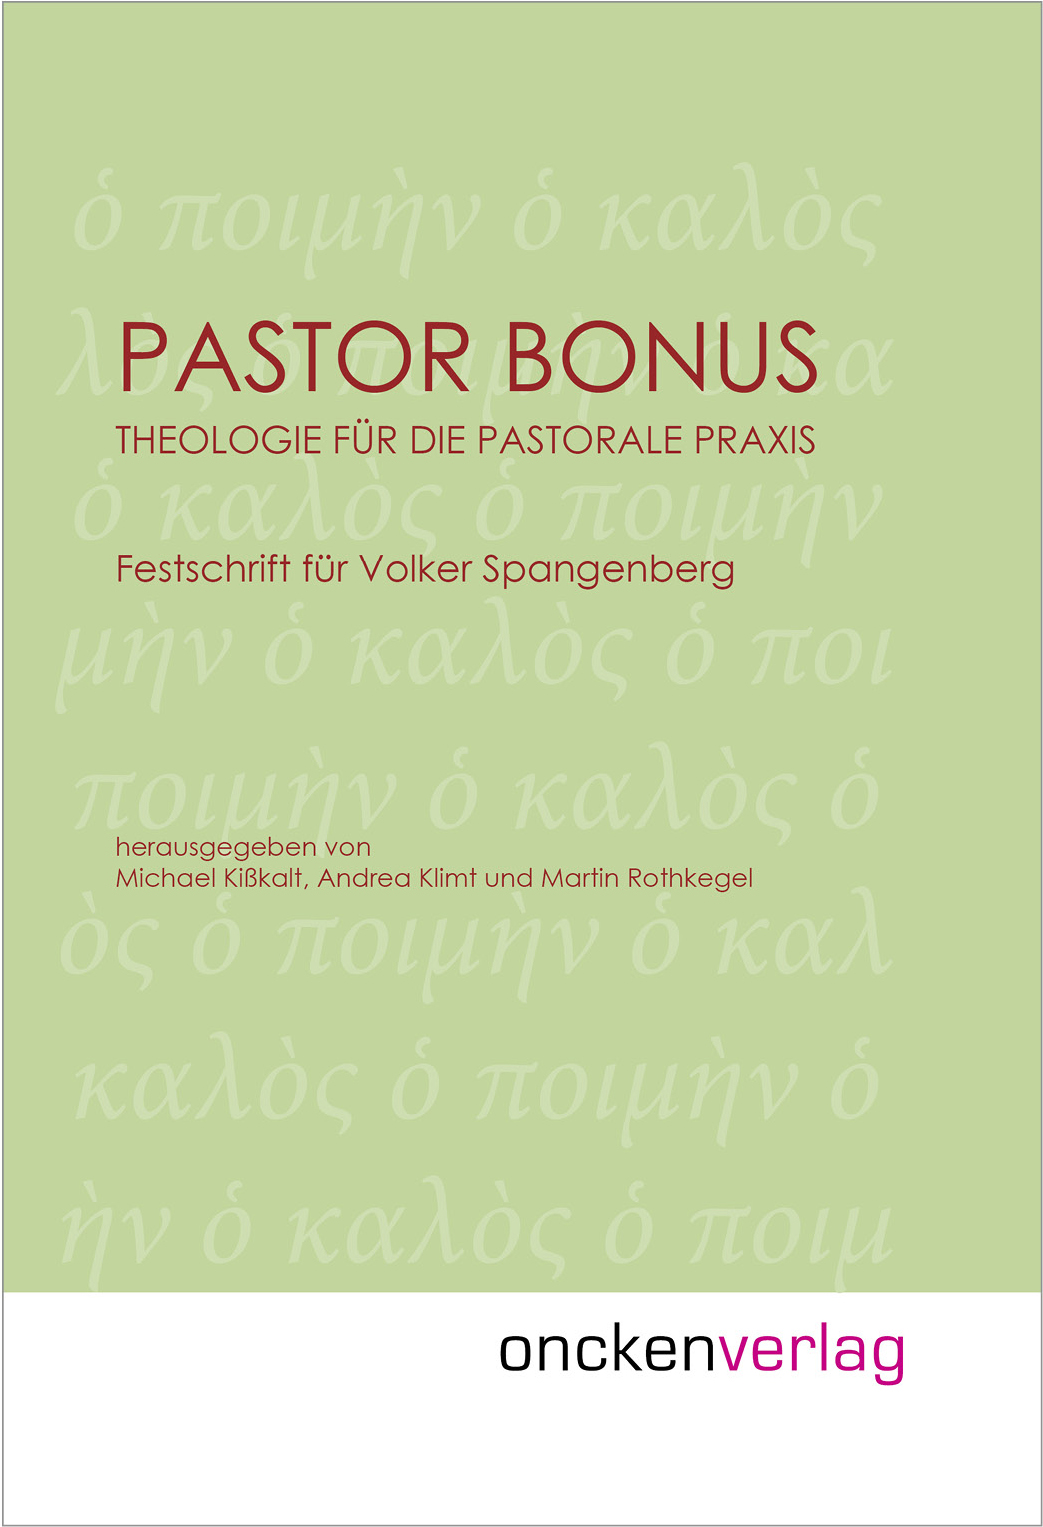 Pastor Bonus - Theologie für die pastorale Praxis